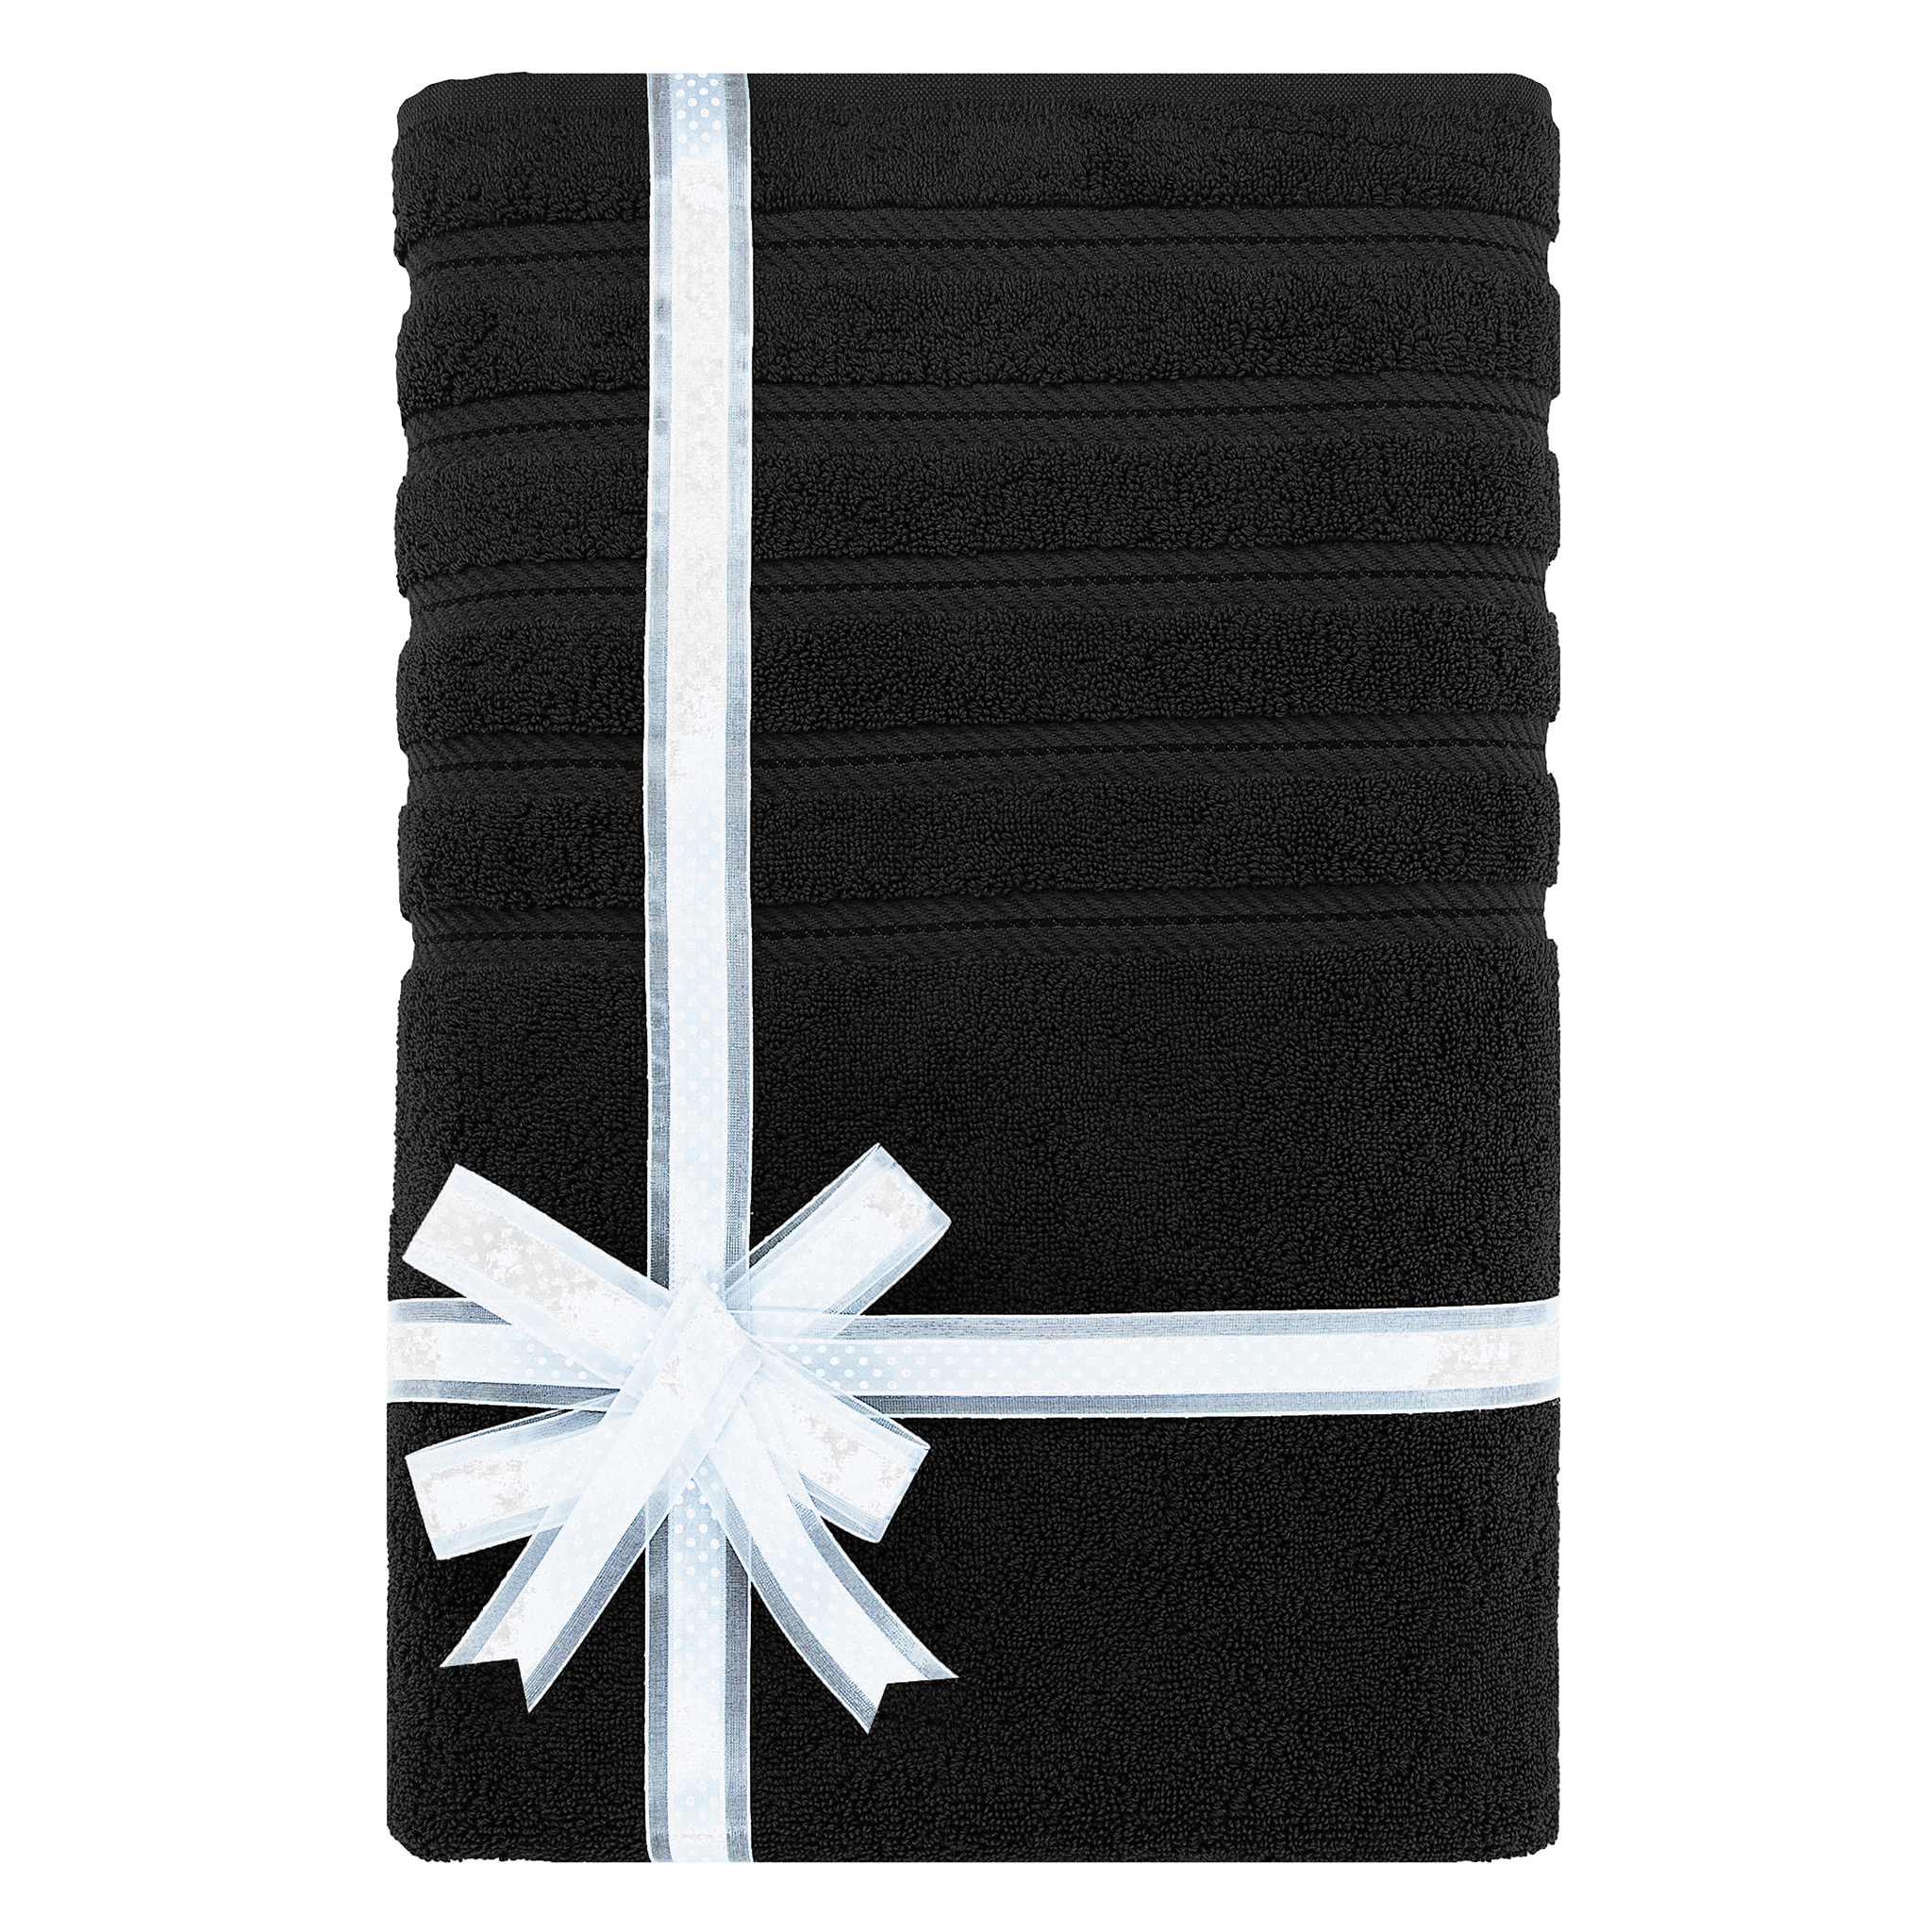 American Soft Linen - 35x70 Jumbo Bath Sheet Turkish Bath Towel - 16 Piece Case Pack - Black - 3